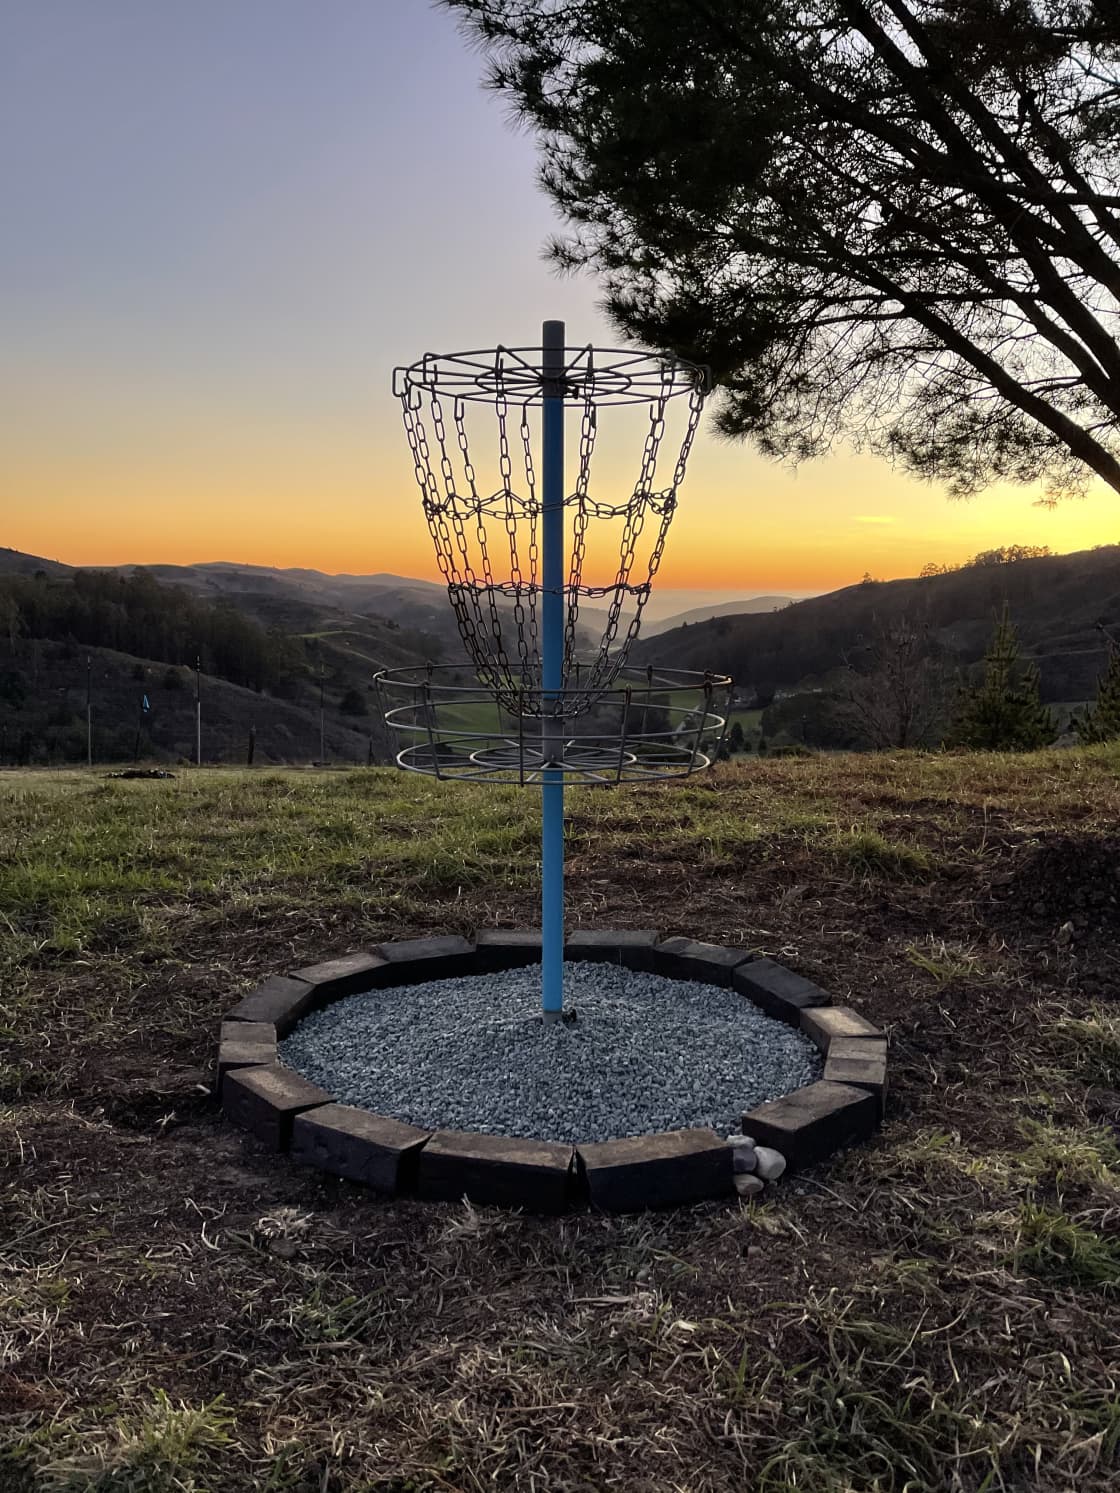 Frisbee golf at sunset anyone?